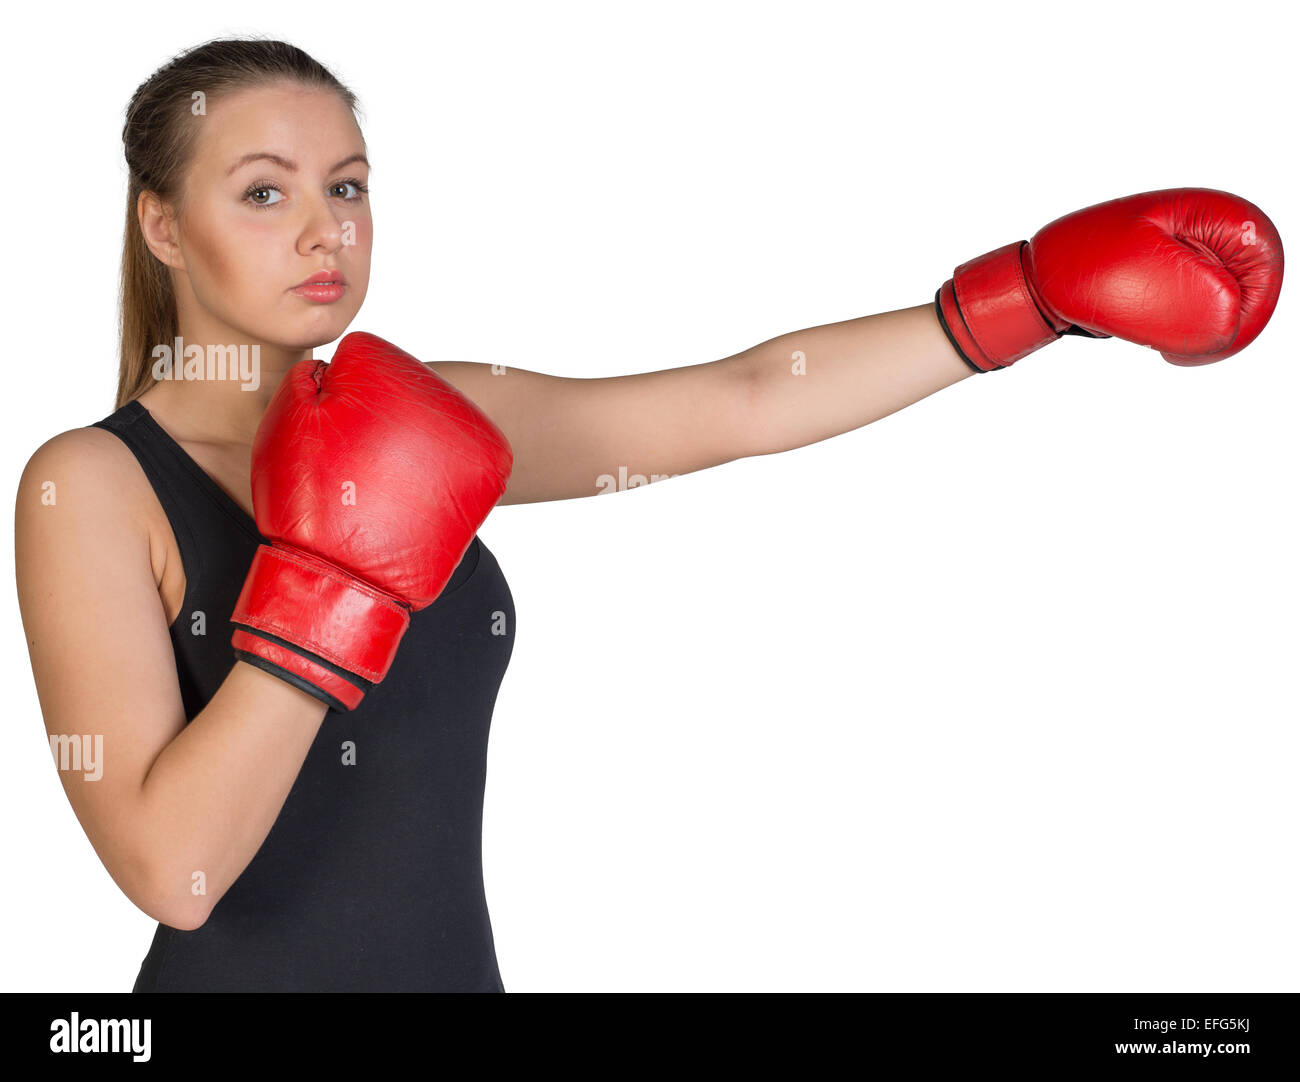 Woman wearing boxing gloves, in punching pose Stock Photo